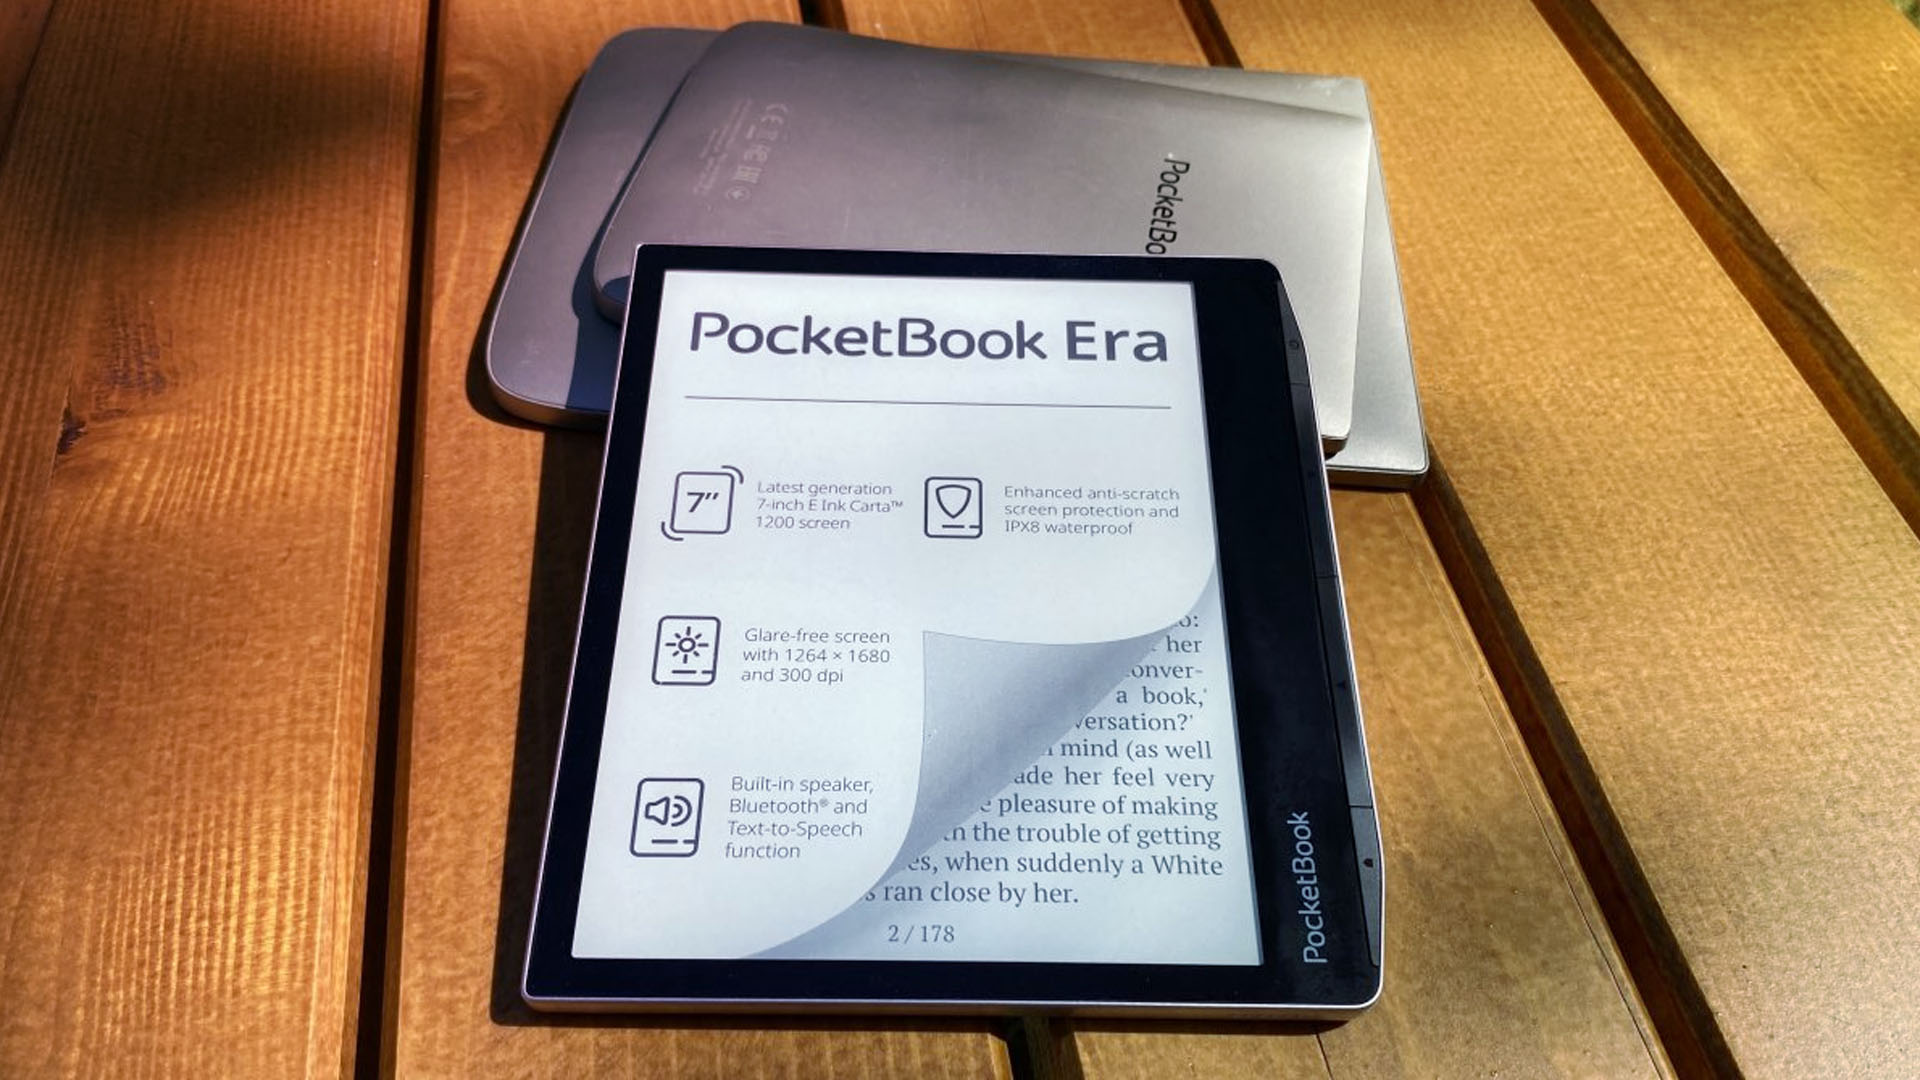 PocketBook Era - 7 inch e-reader with Carta 1200